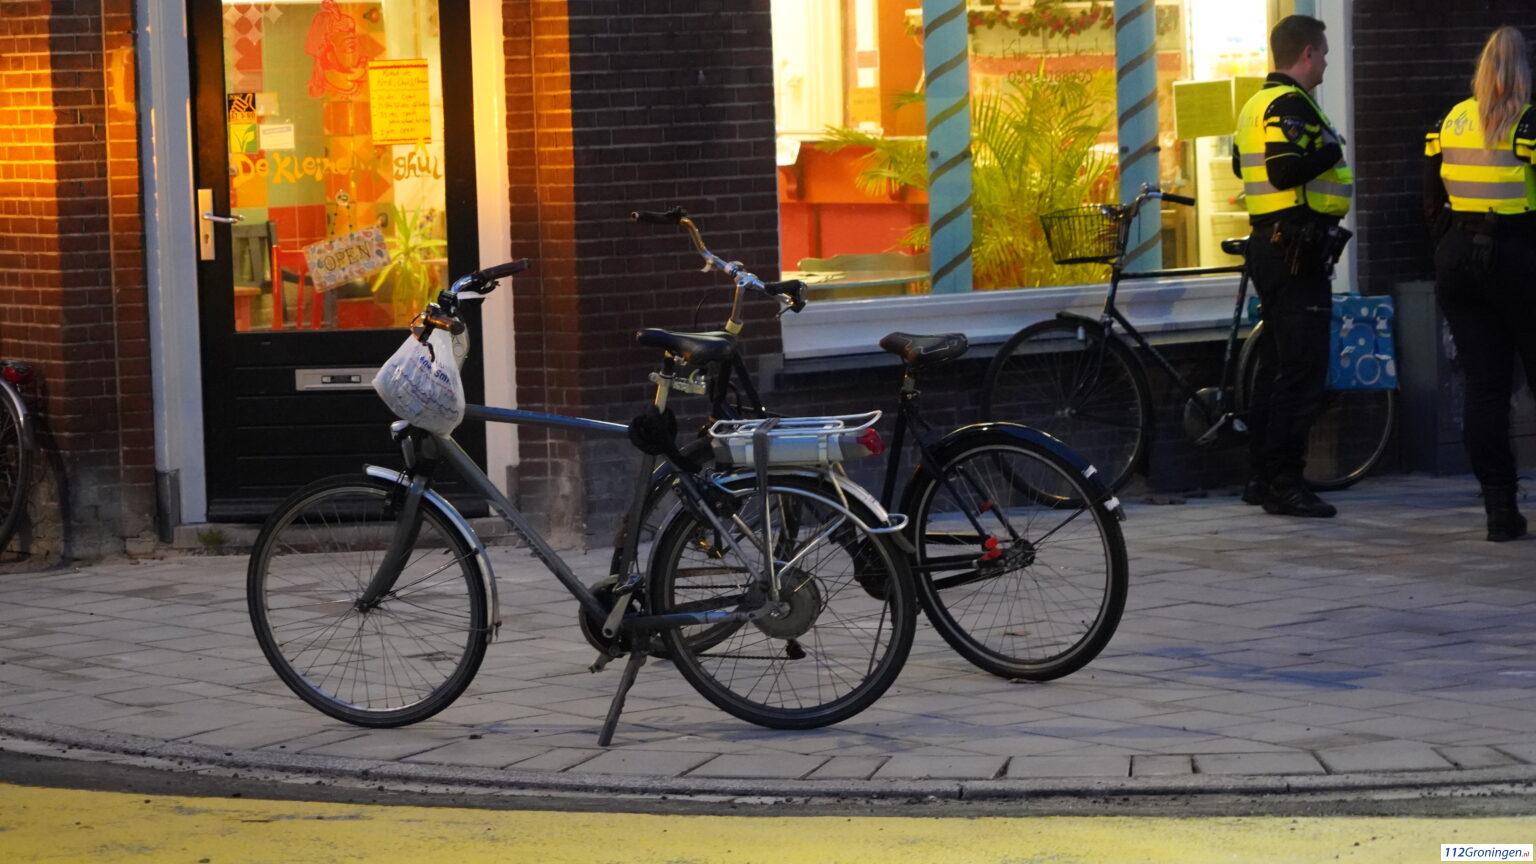 Ongeval tussen twee fietsers op de Nieuwe Boteringestraat.